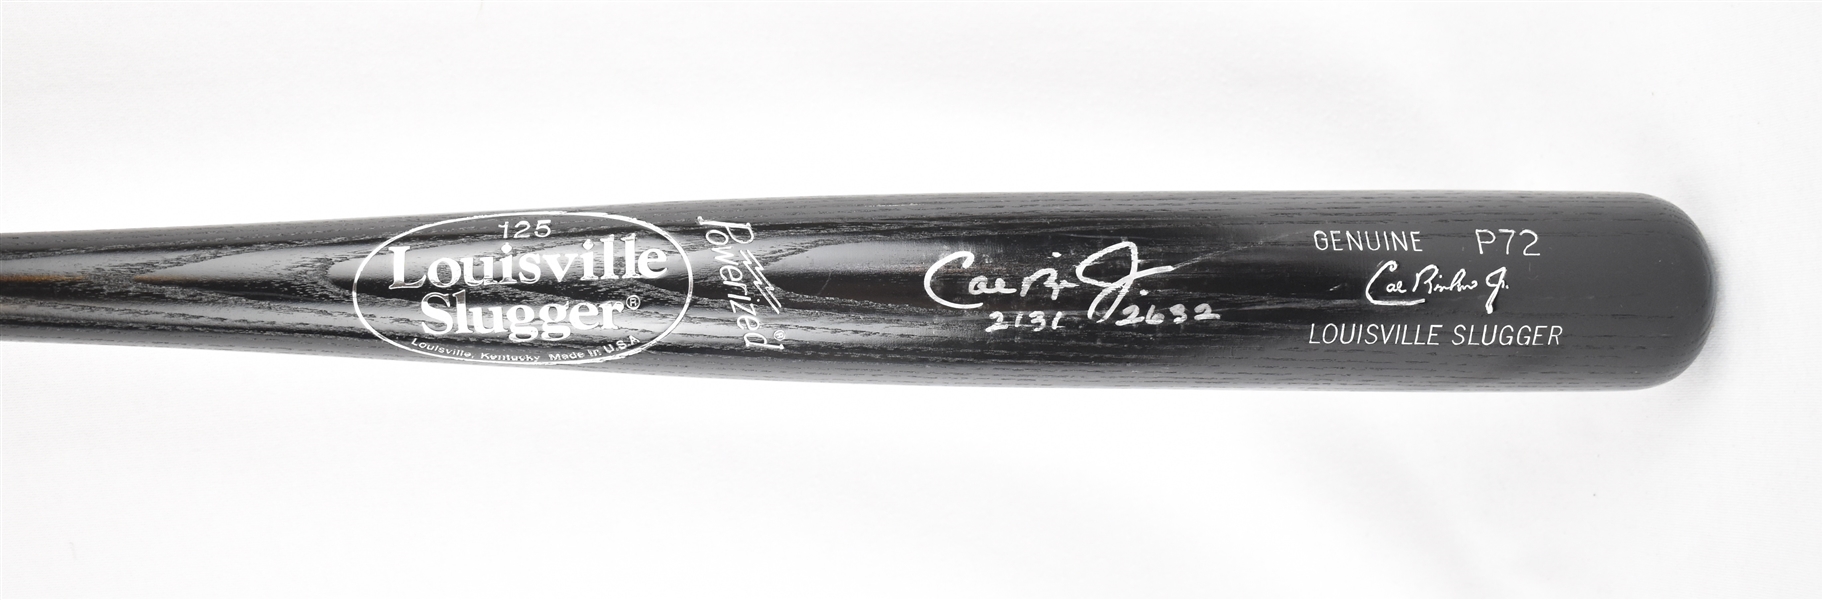 Cal Ripken Autographed & Inscribed Bat